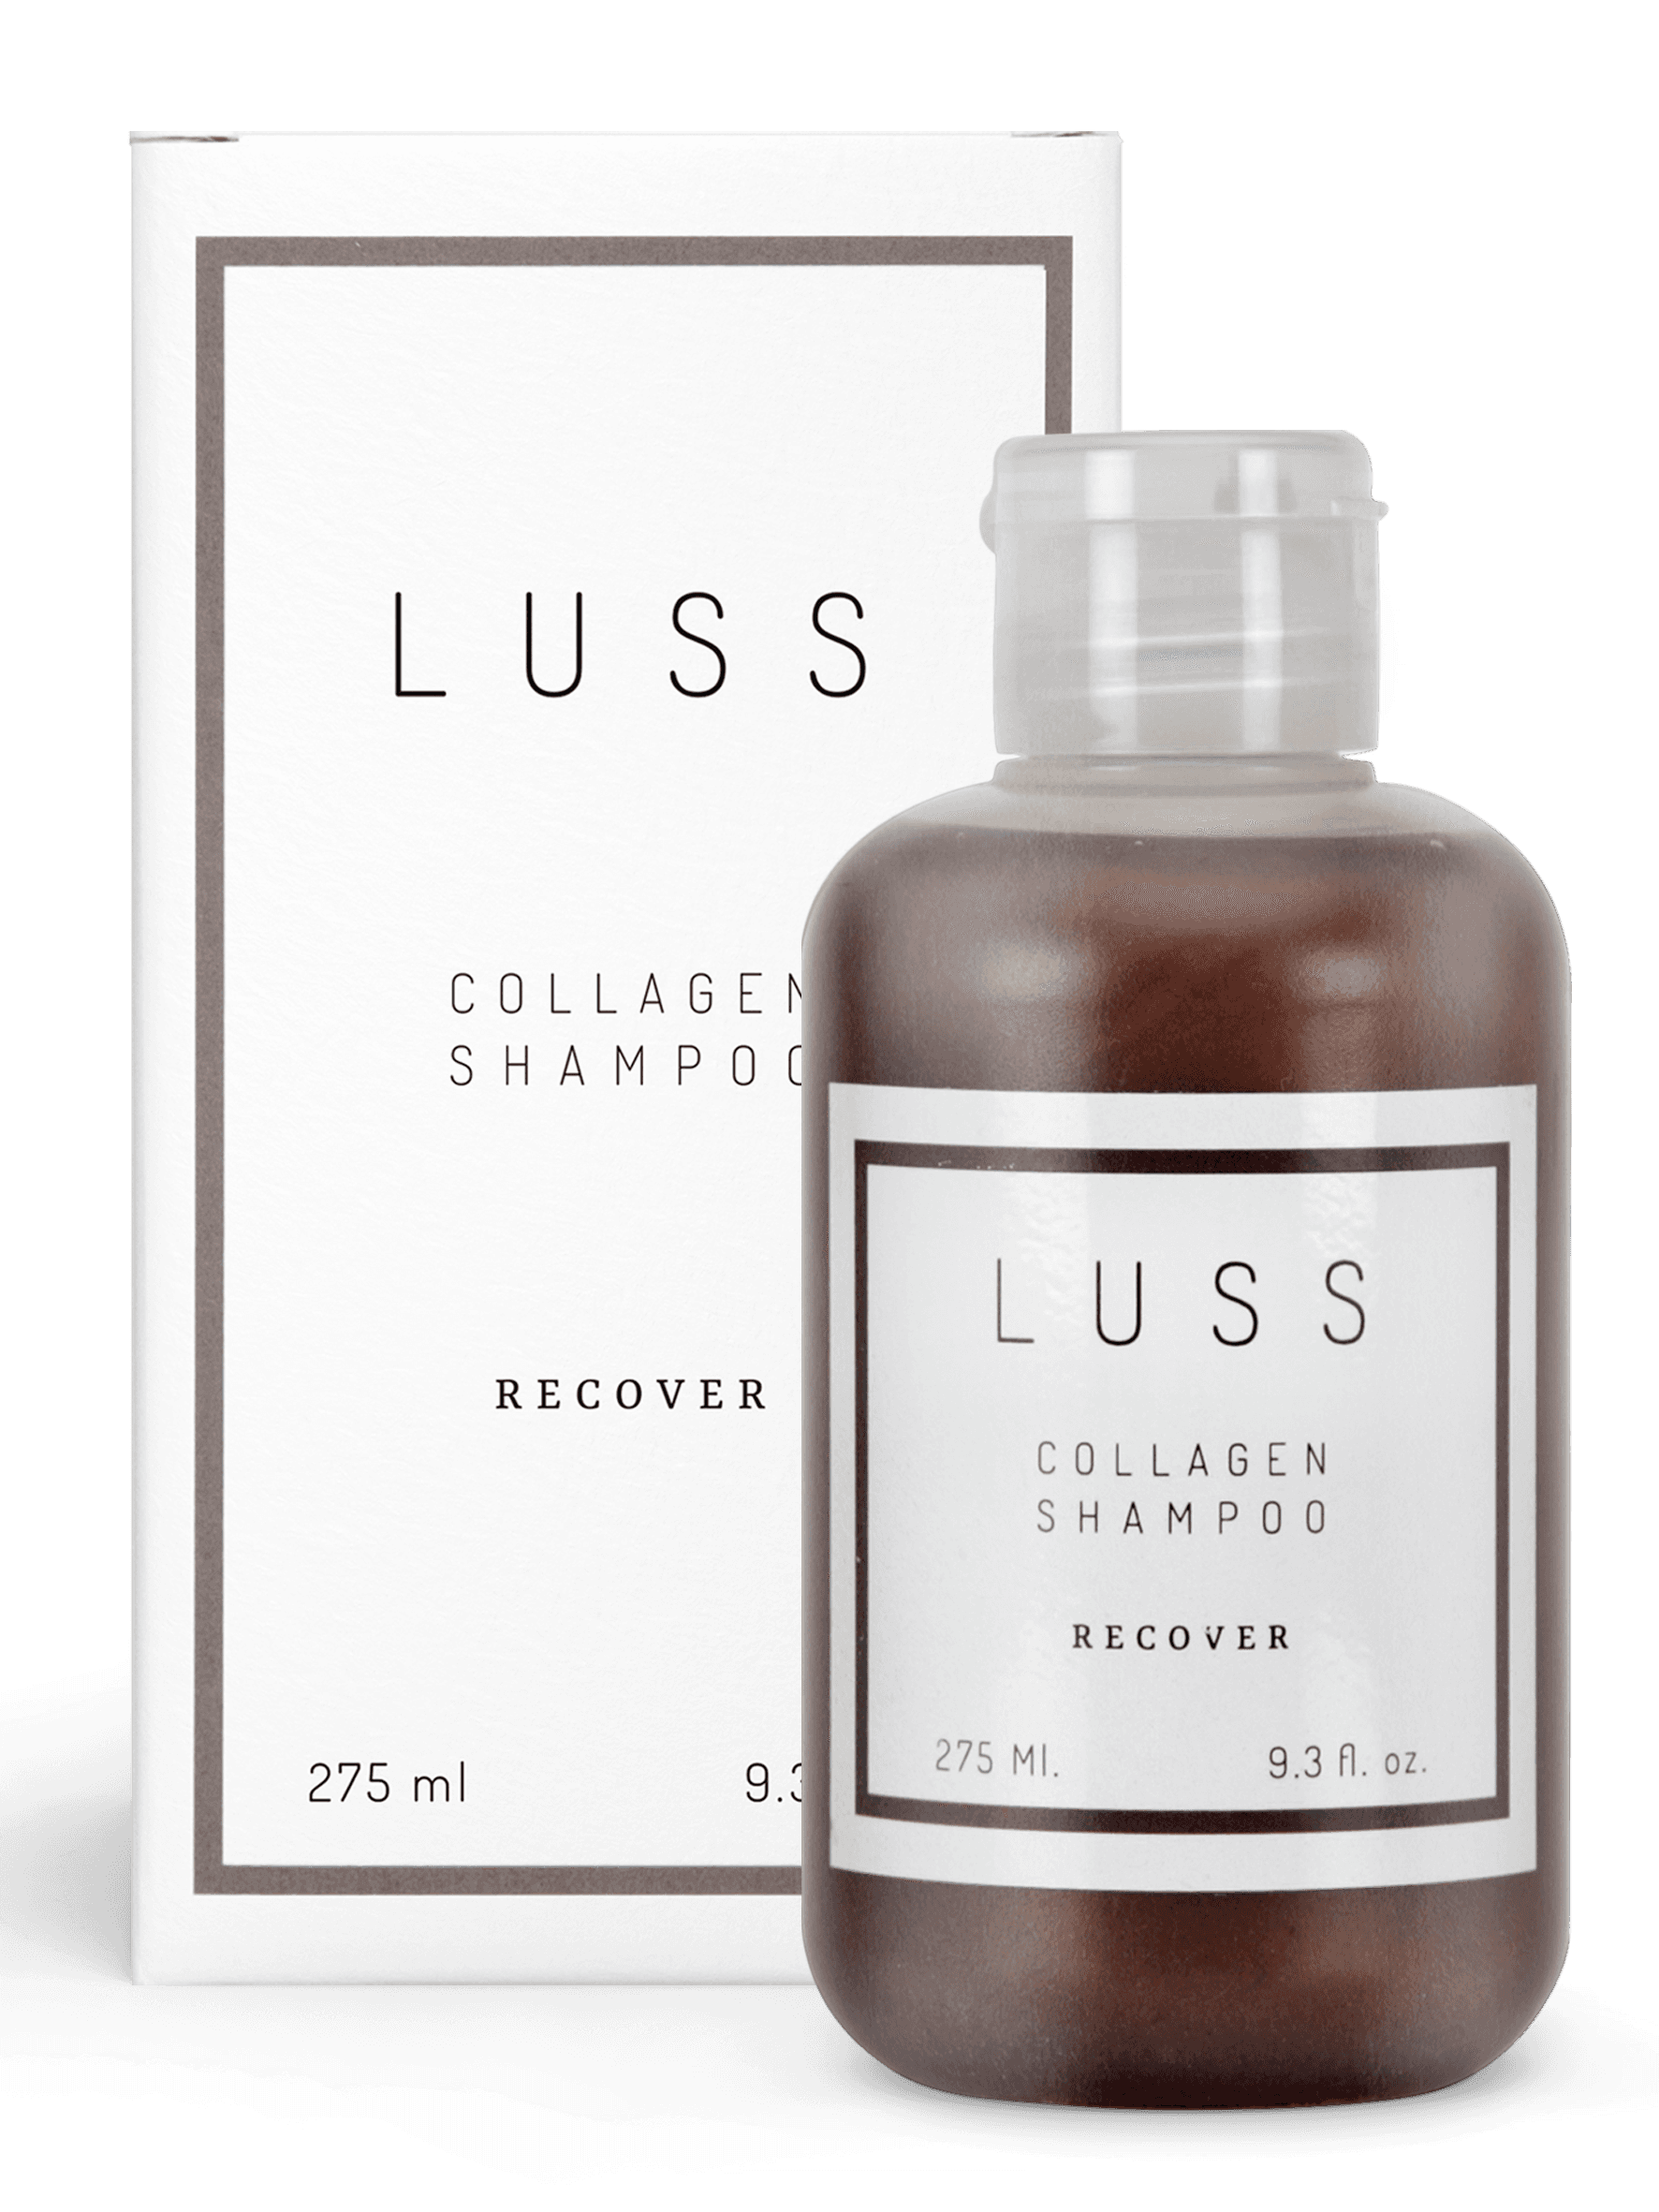 LUSS Collagen Shampoo Recover